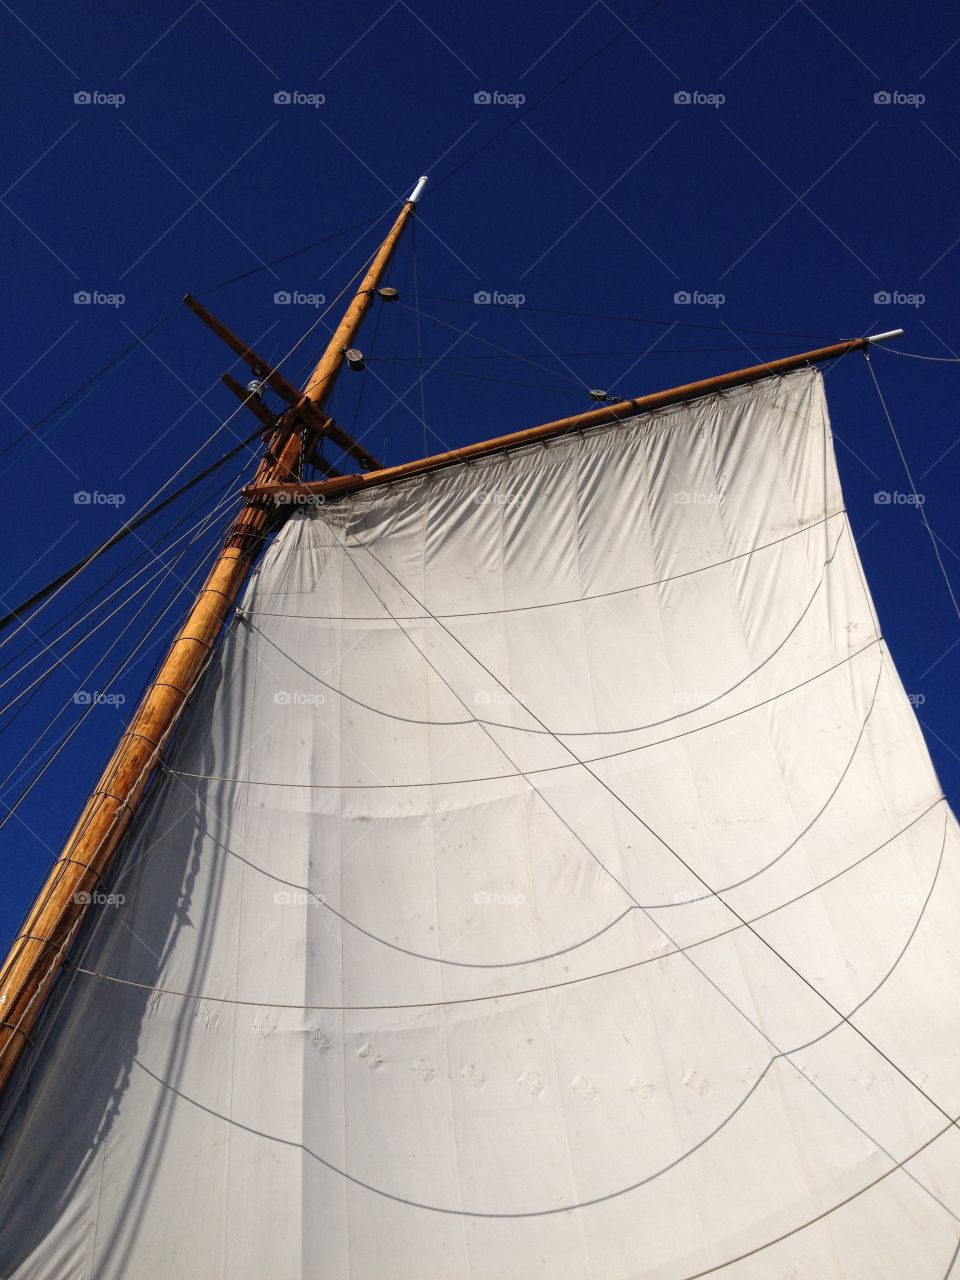 The wing. Sailship's sail